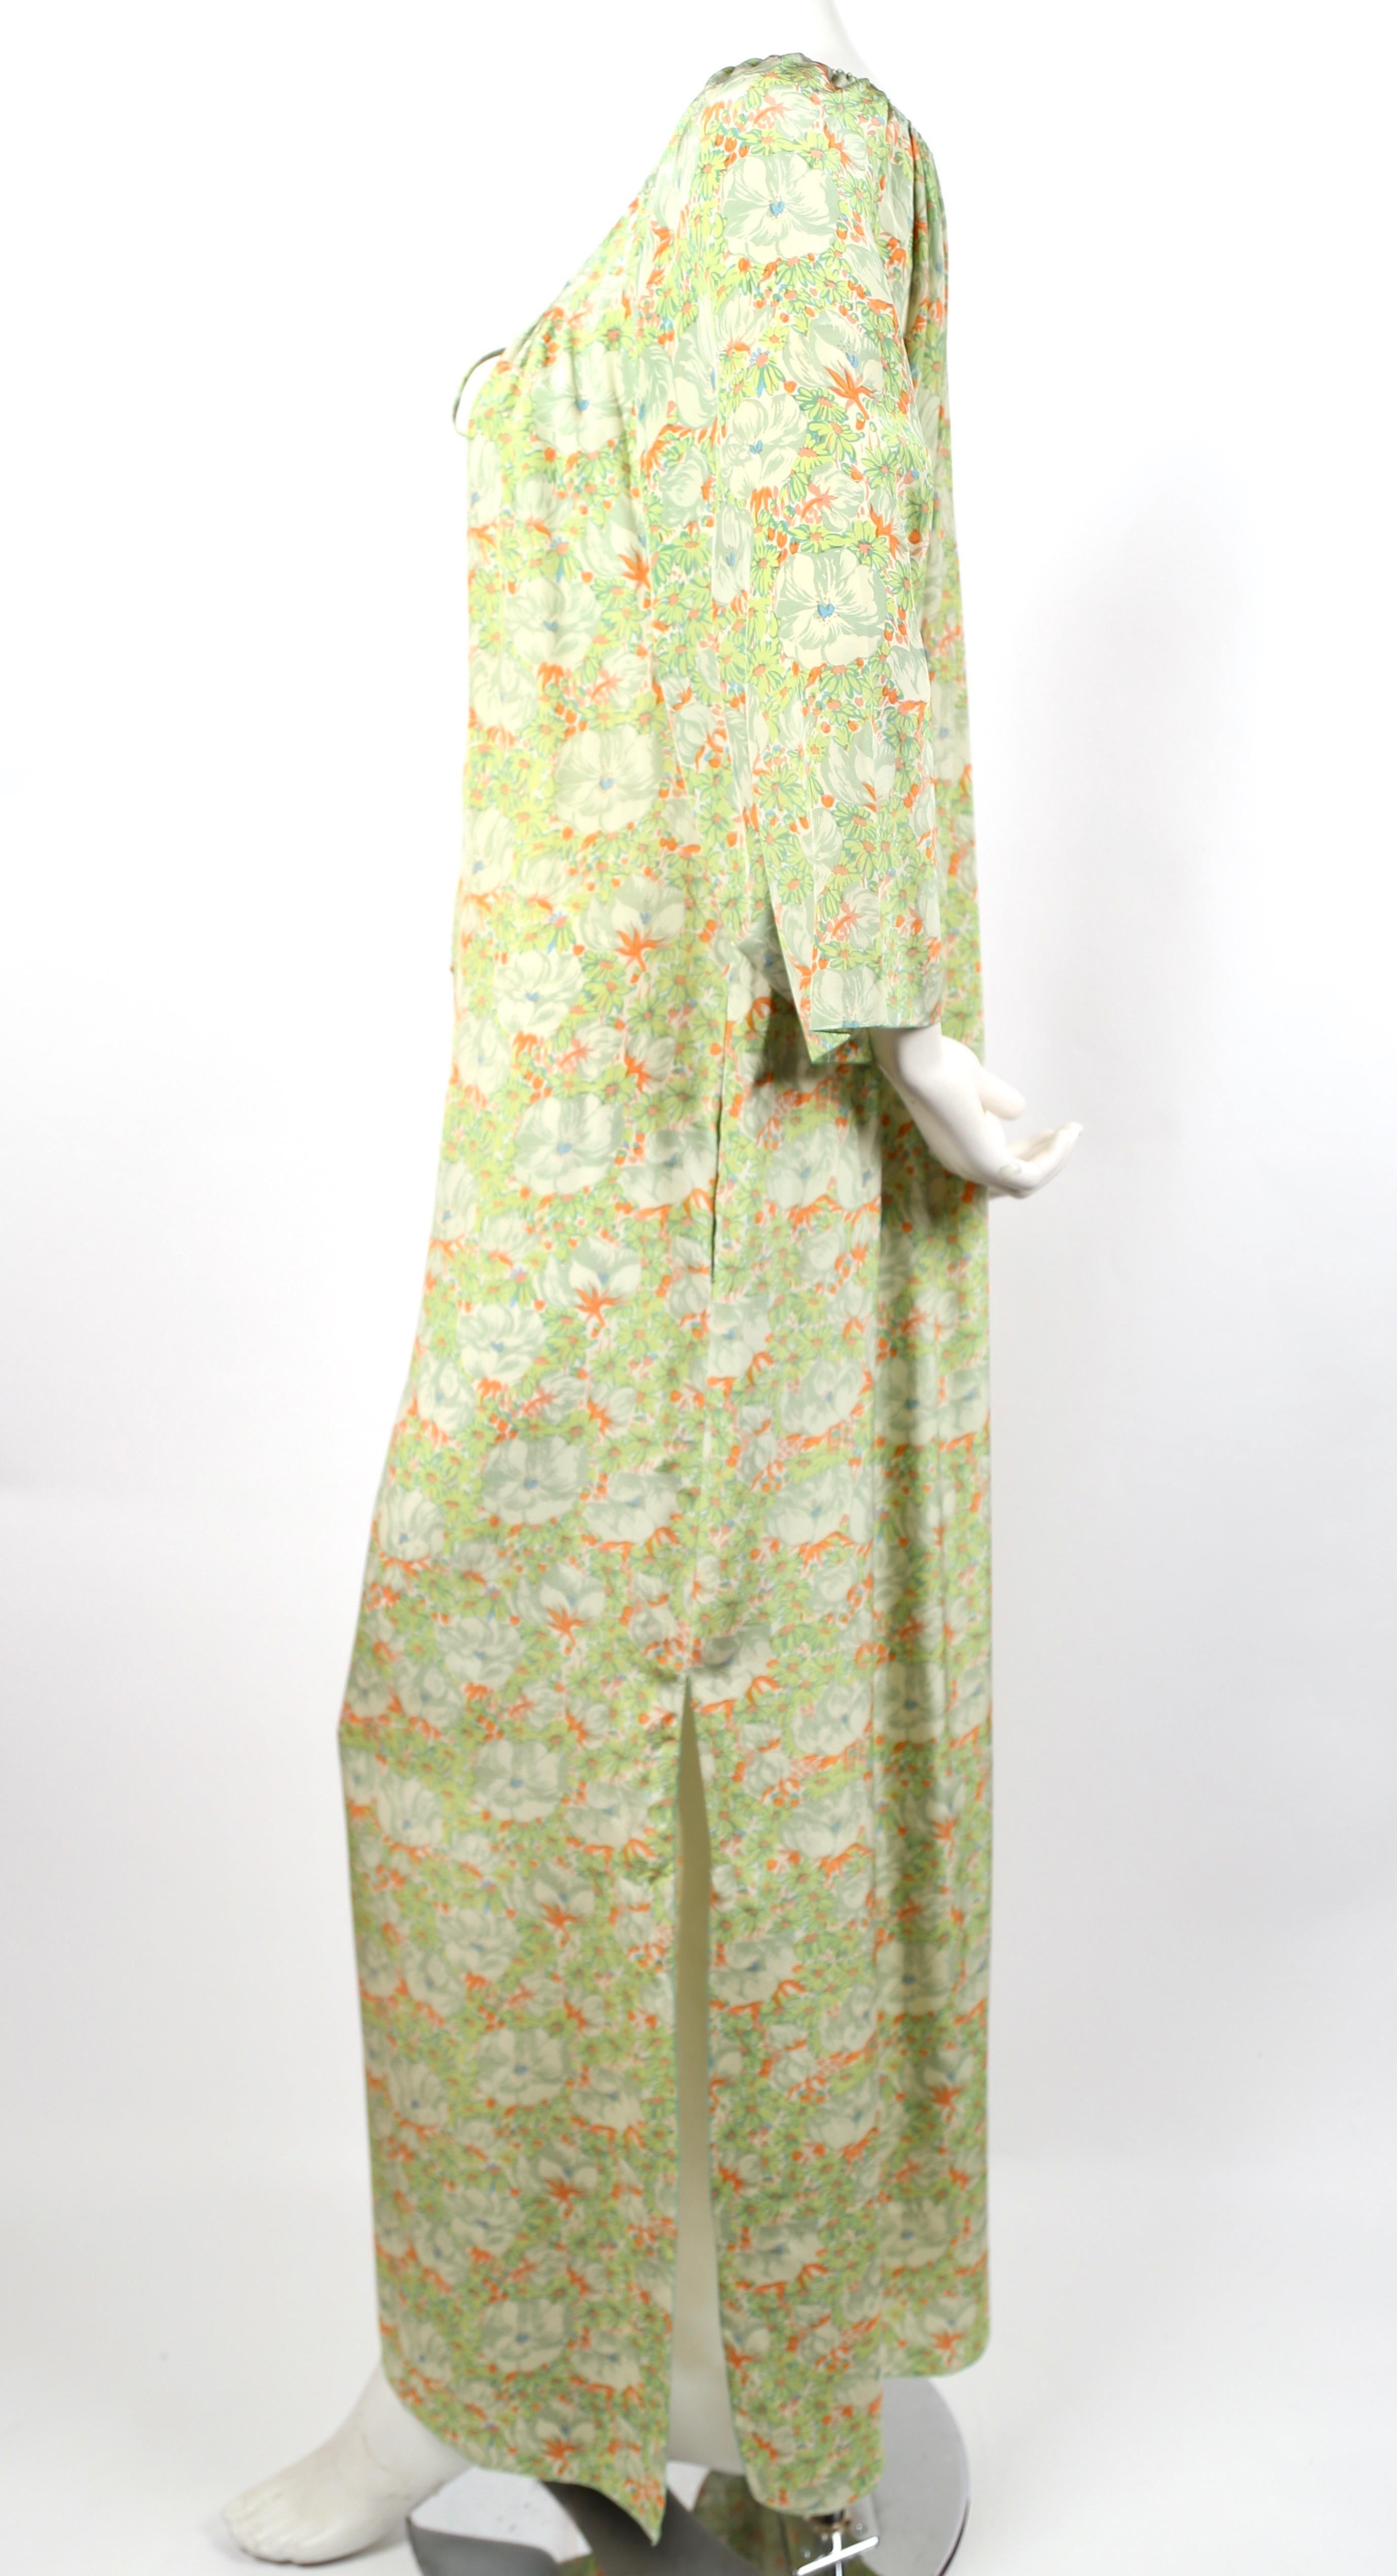 Beige 1970's CHRISTIAN DIOR floral printed silk caftan dress